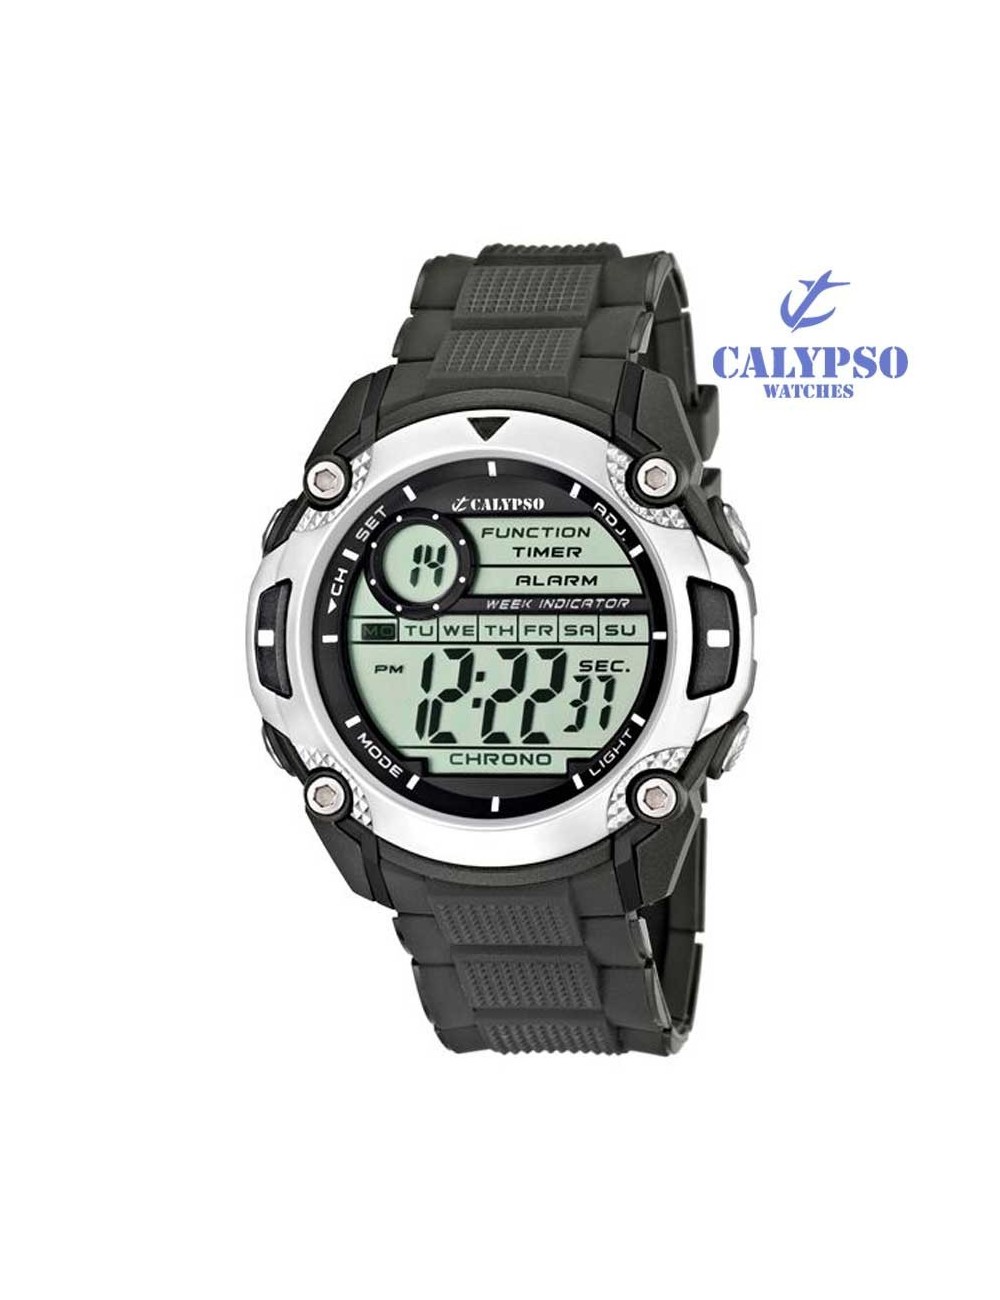 reloj-calypso-hombre-ditital-k5577-1